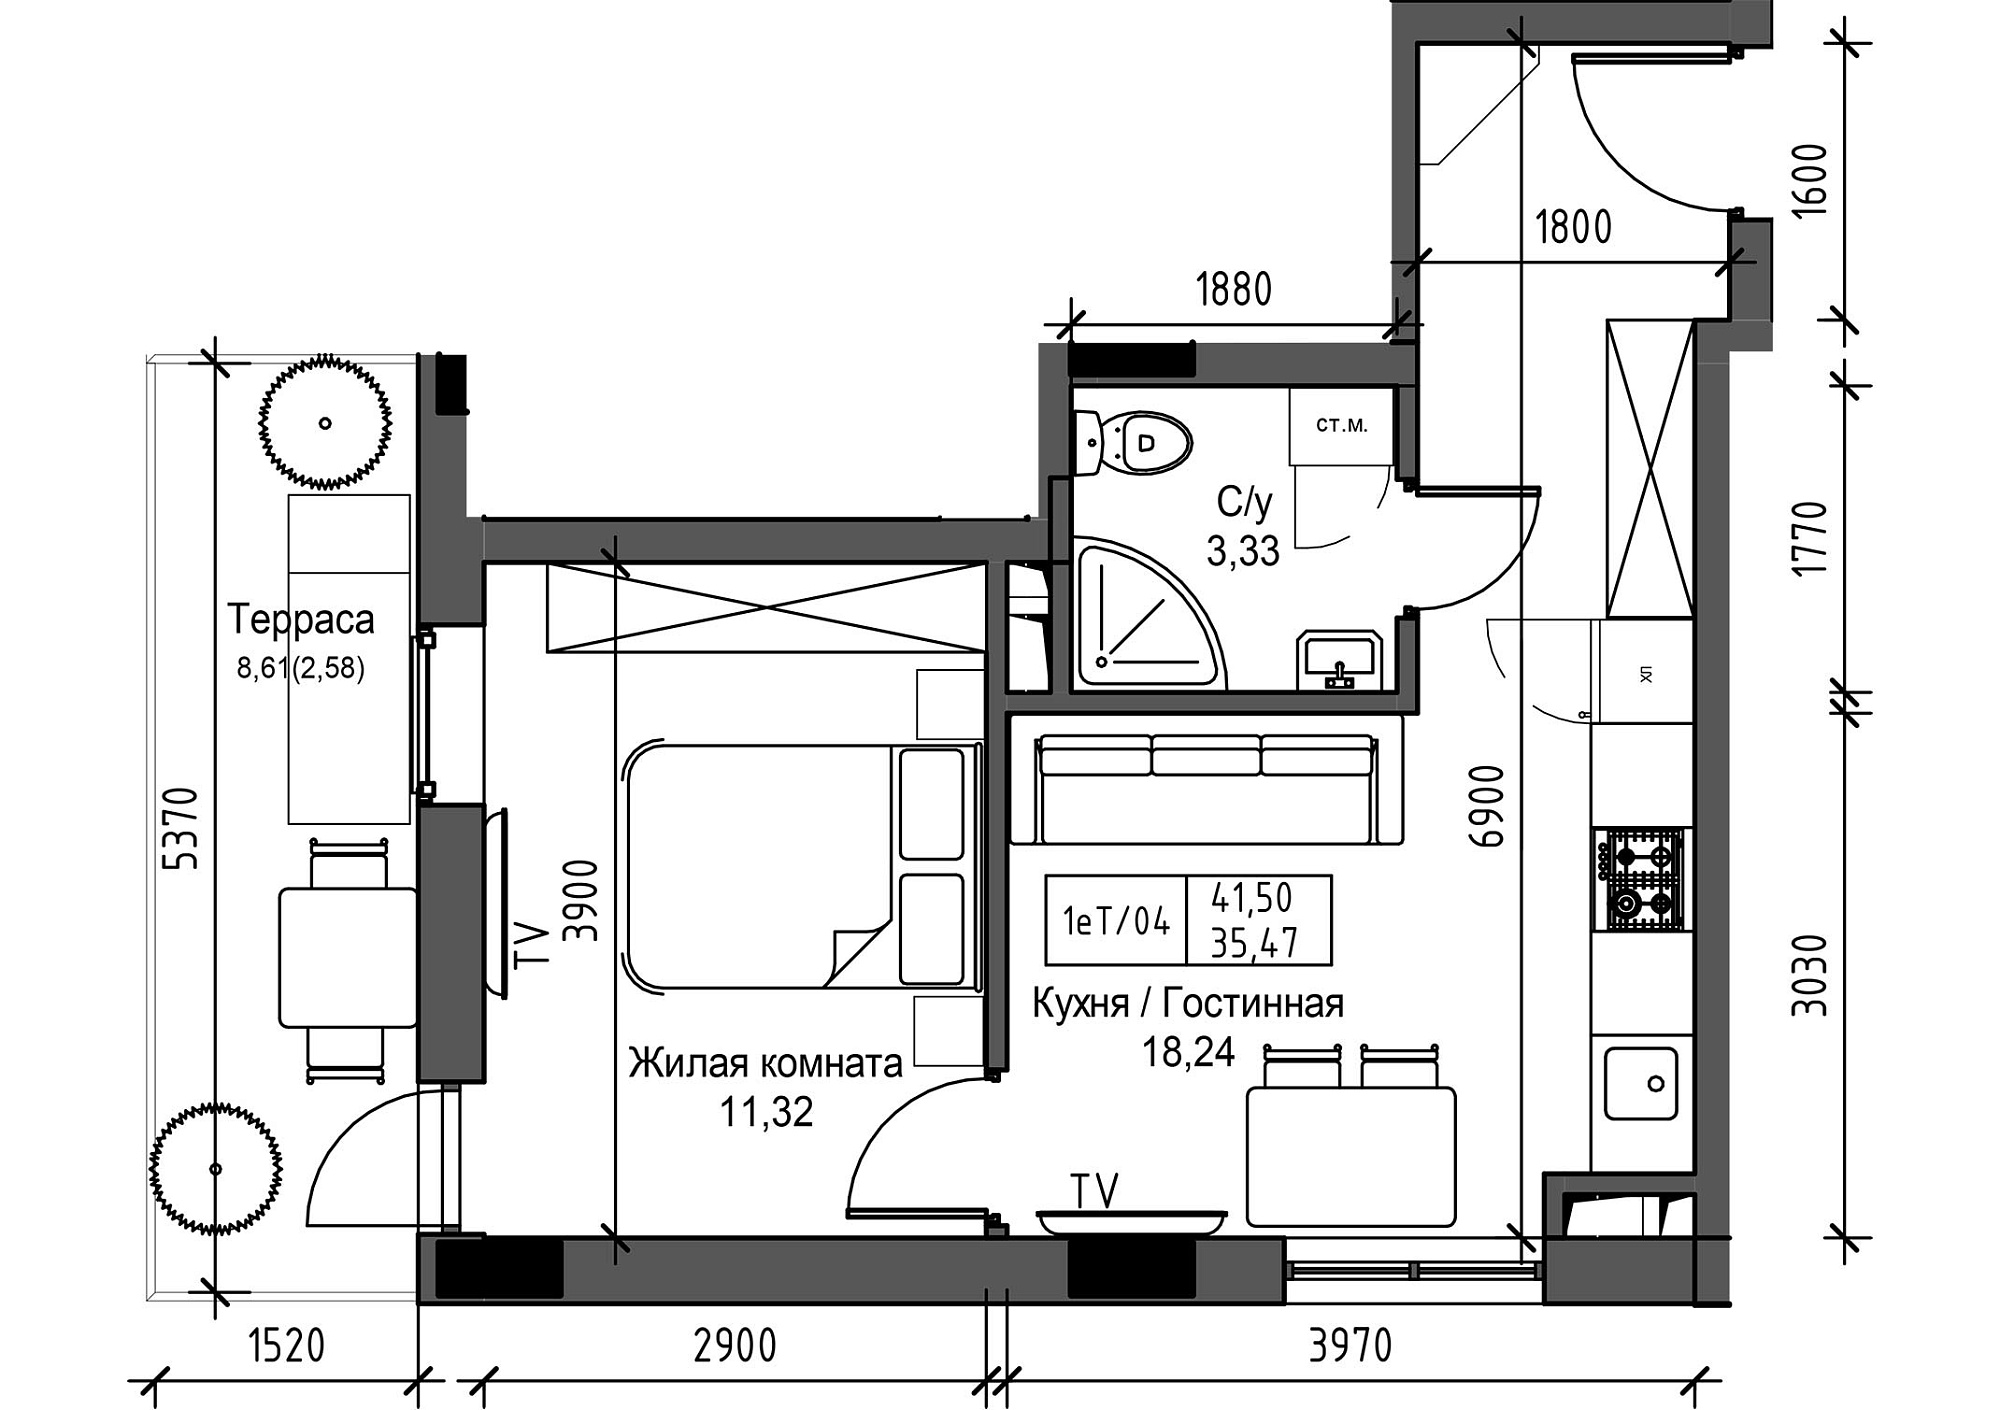 Планування 1-к квартира площею 35.47м2, UM-003-03/0008.